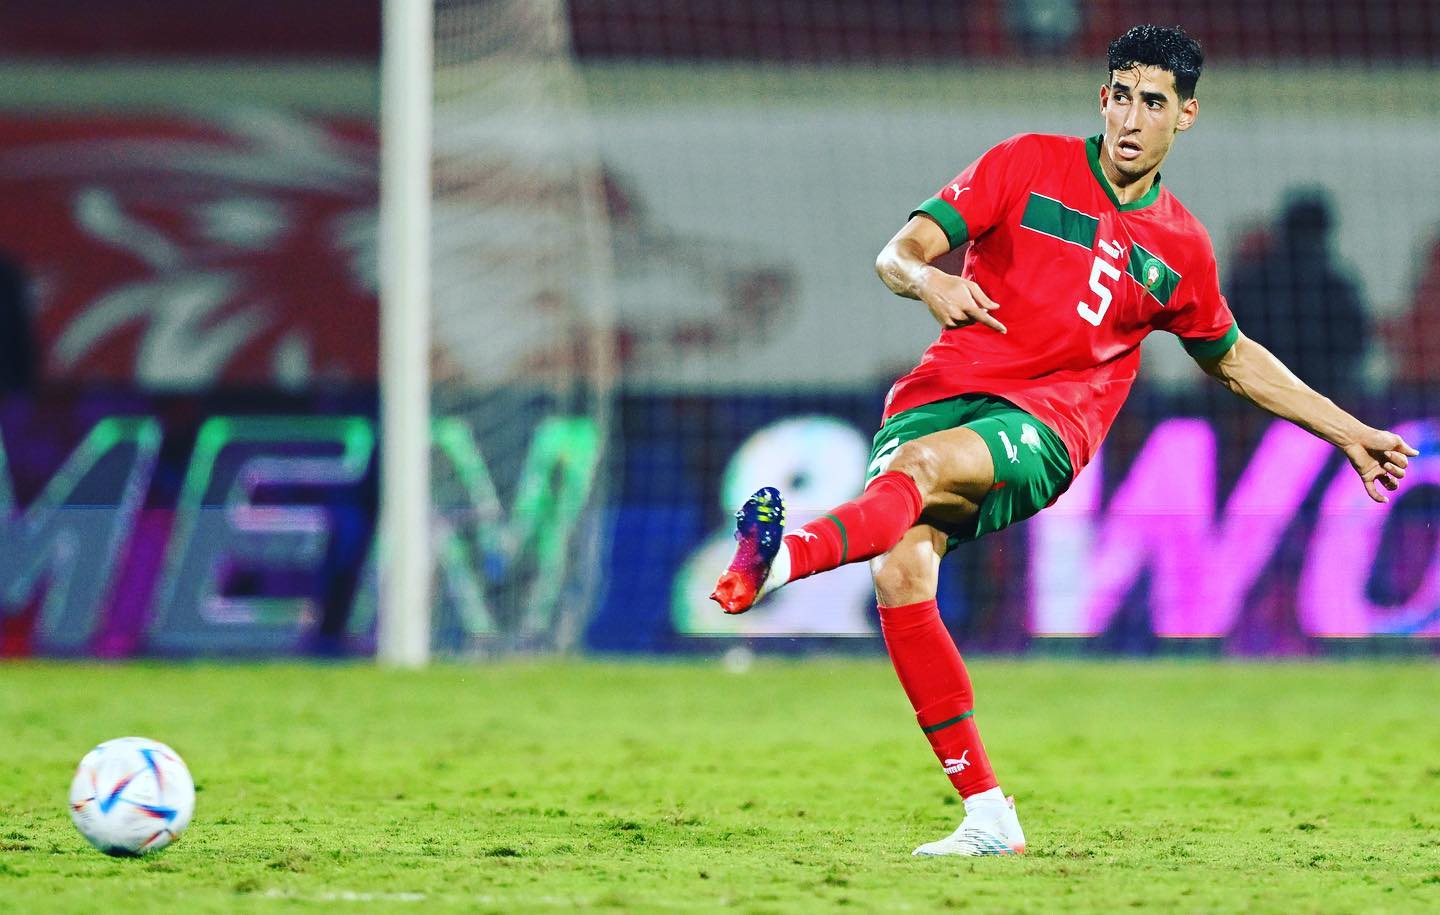 FIFA World Cup 2022: Morocco’s Nayaf Aguerdo’s own goal takes goal tally to 100